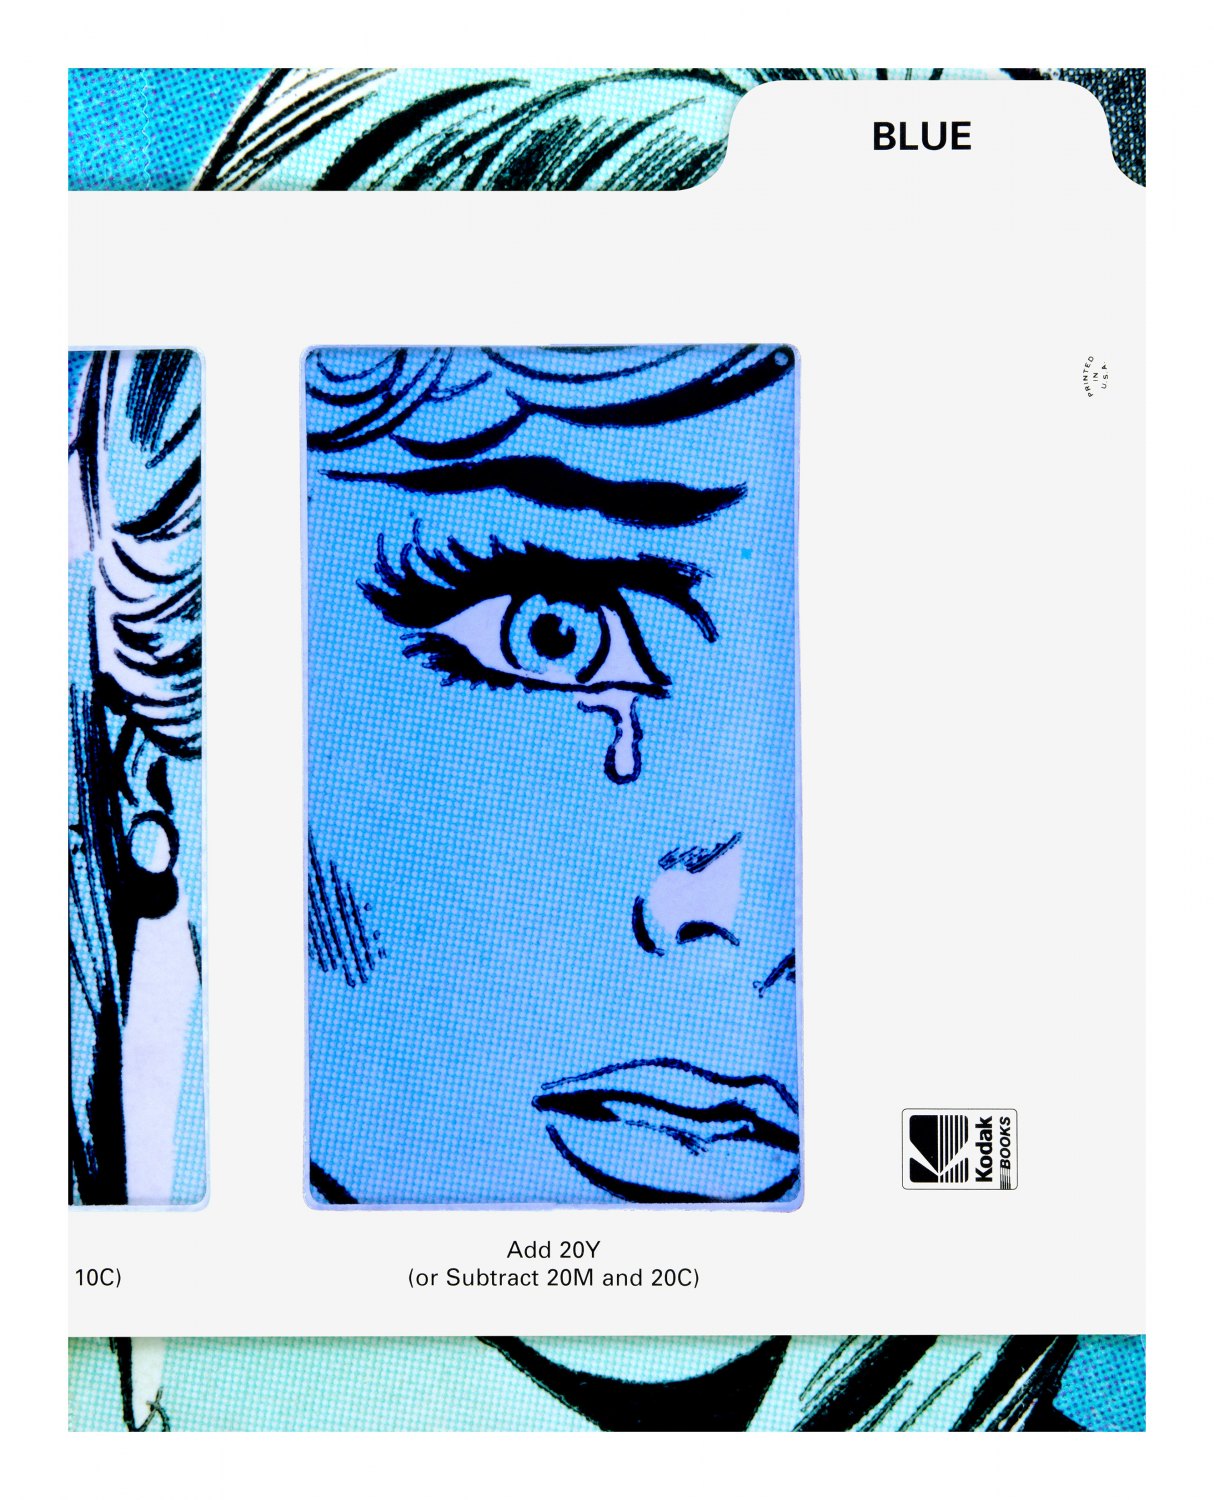 Anne Collier Filter #3 (Blue), 2020 C-print, 59.25 x 47.75 (cm) 